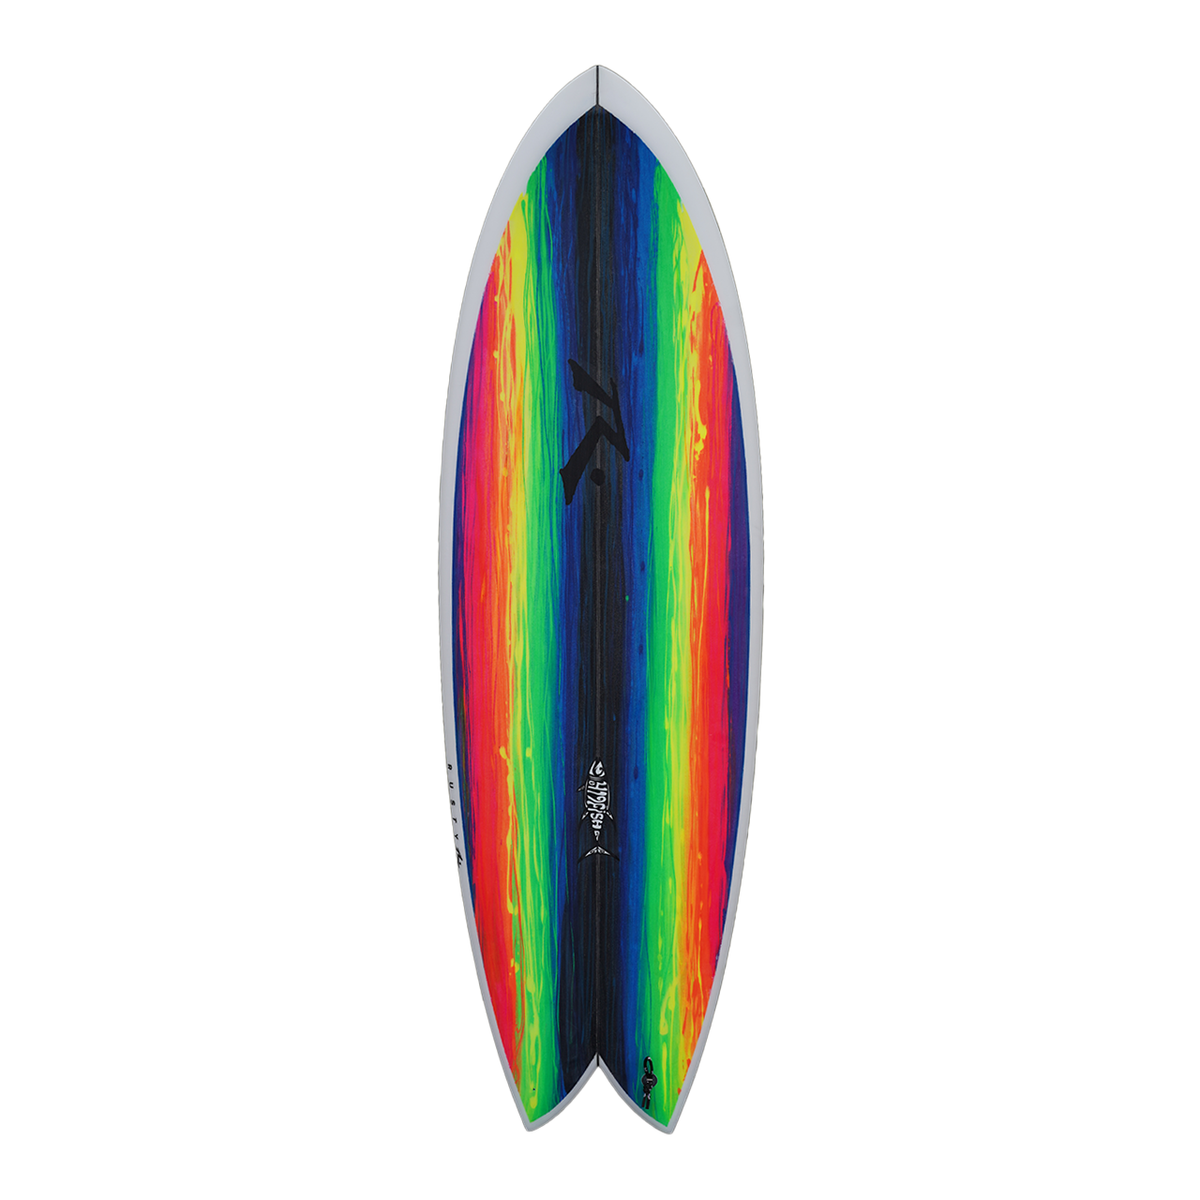 419fish - Alternative - Rusty Surfboards - Top View - Rainbow